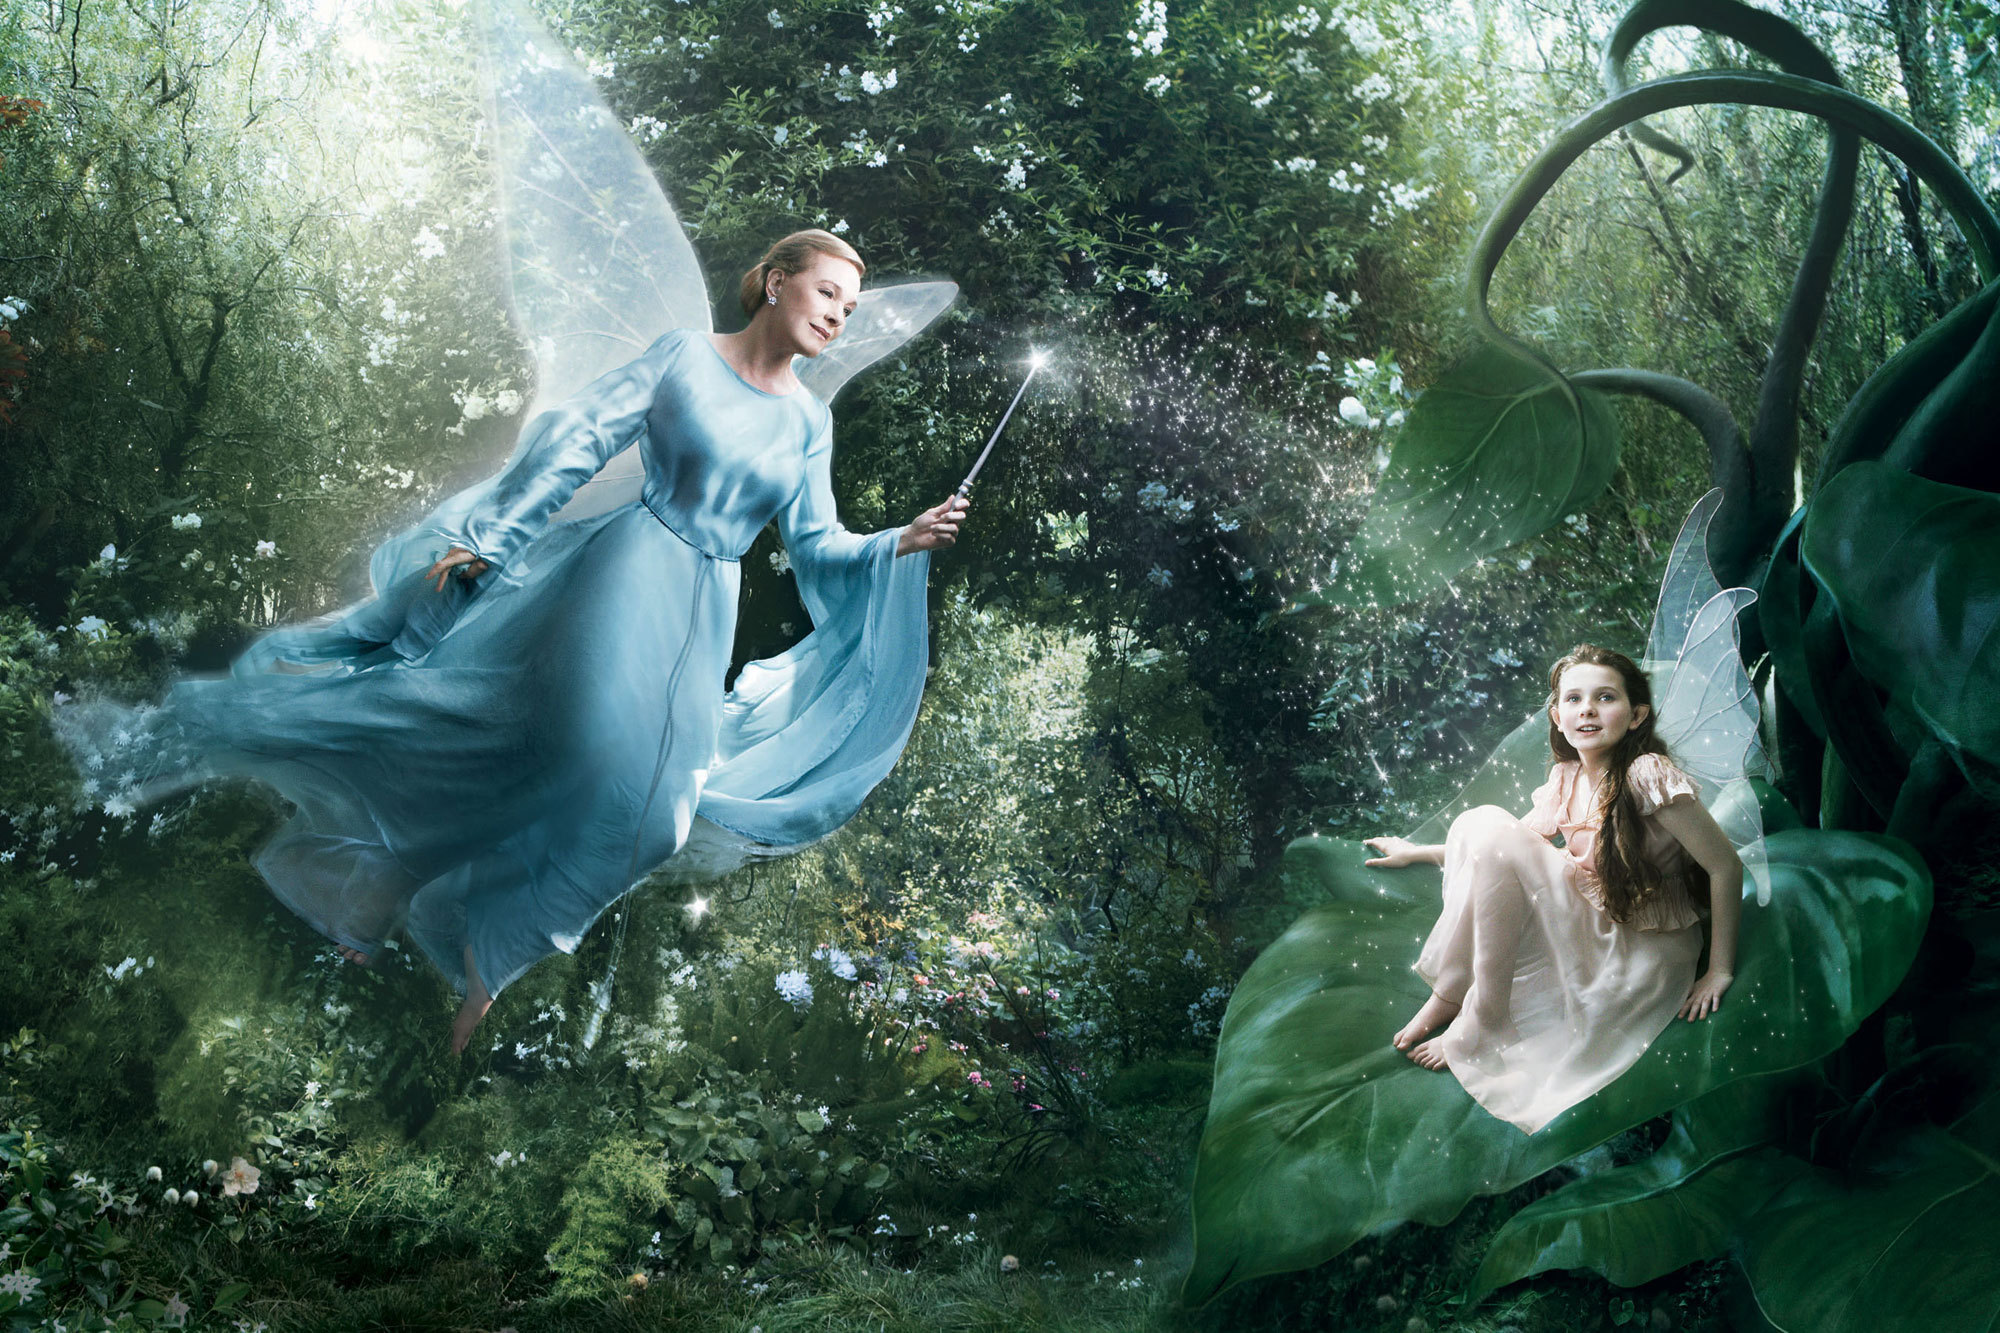 Annie Leibovitzs fairytales